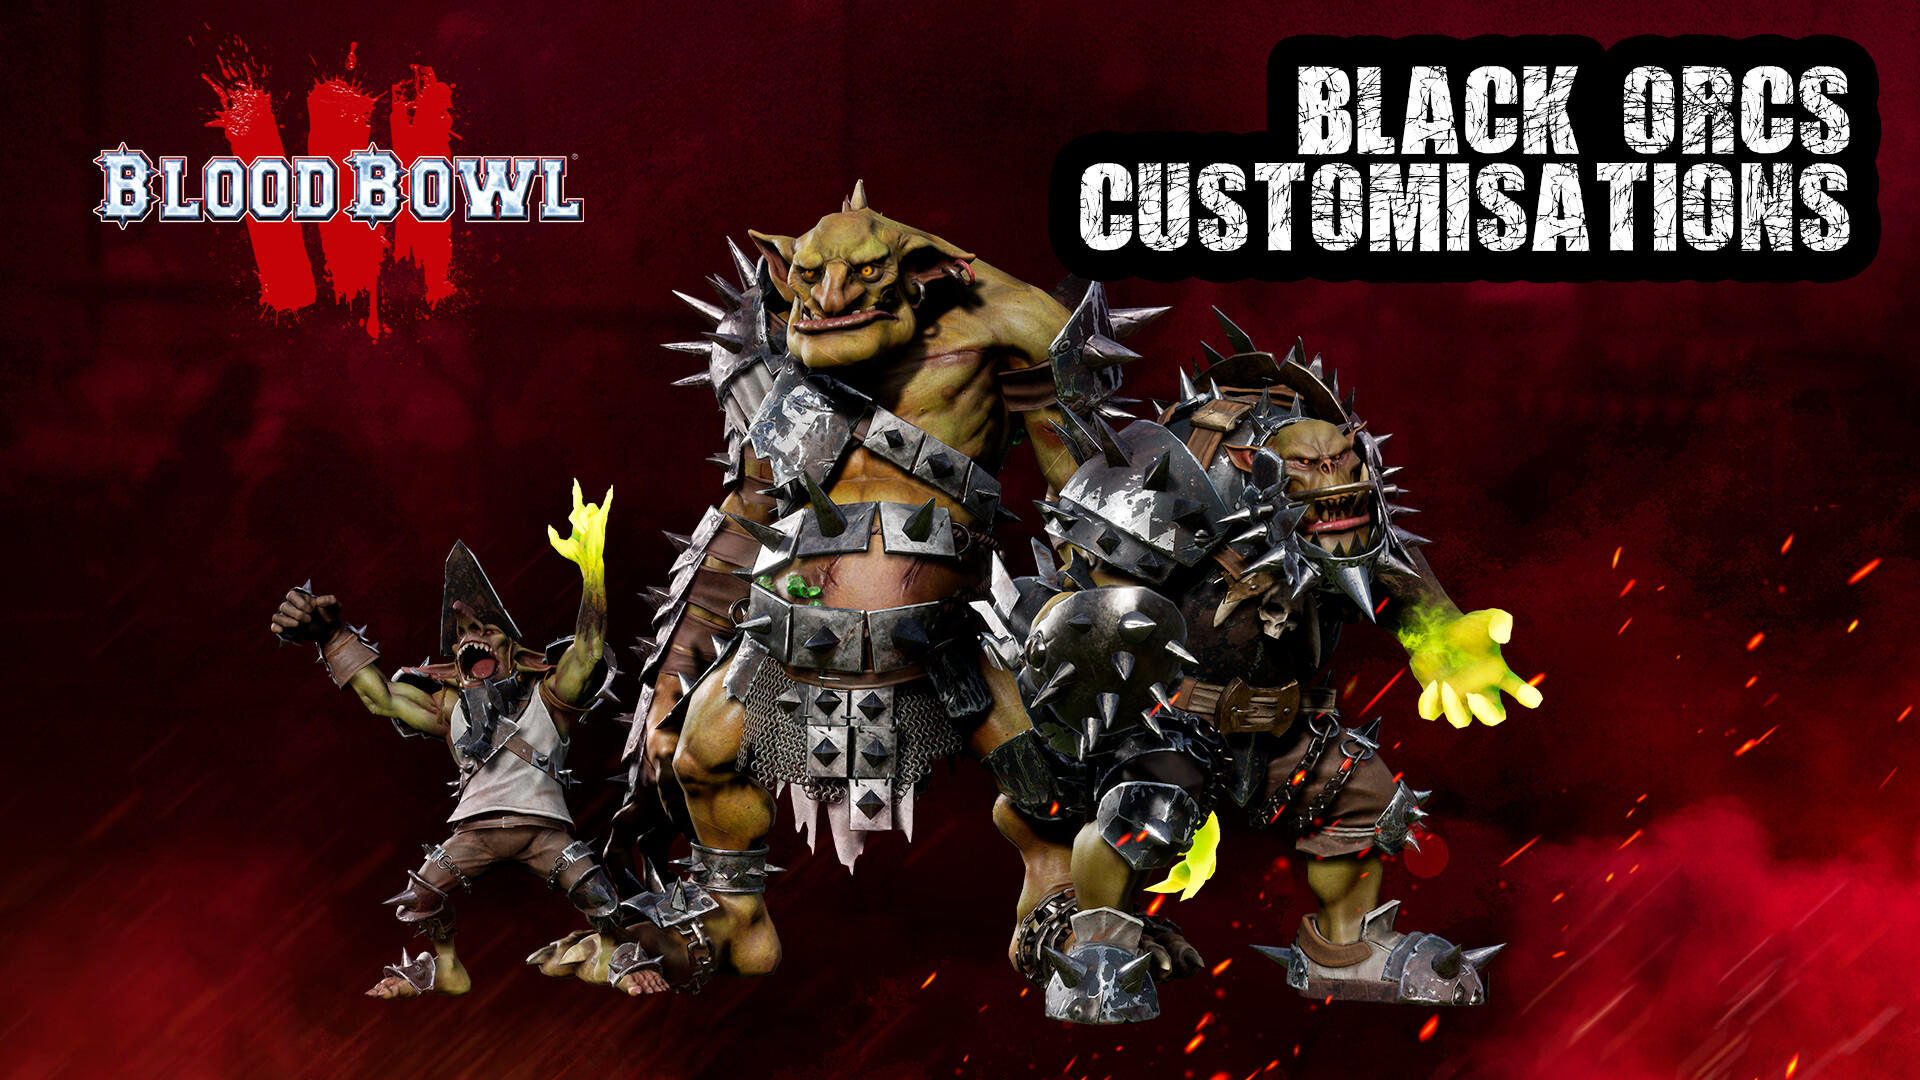 Blood Bowl 3 - Black Orcs Customizations DLC Steam CD Key 3.82 $